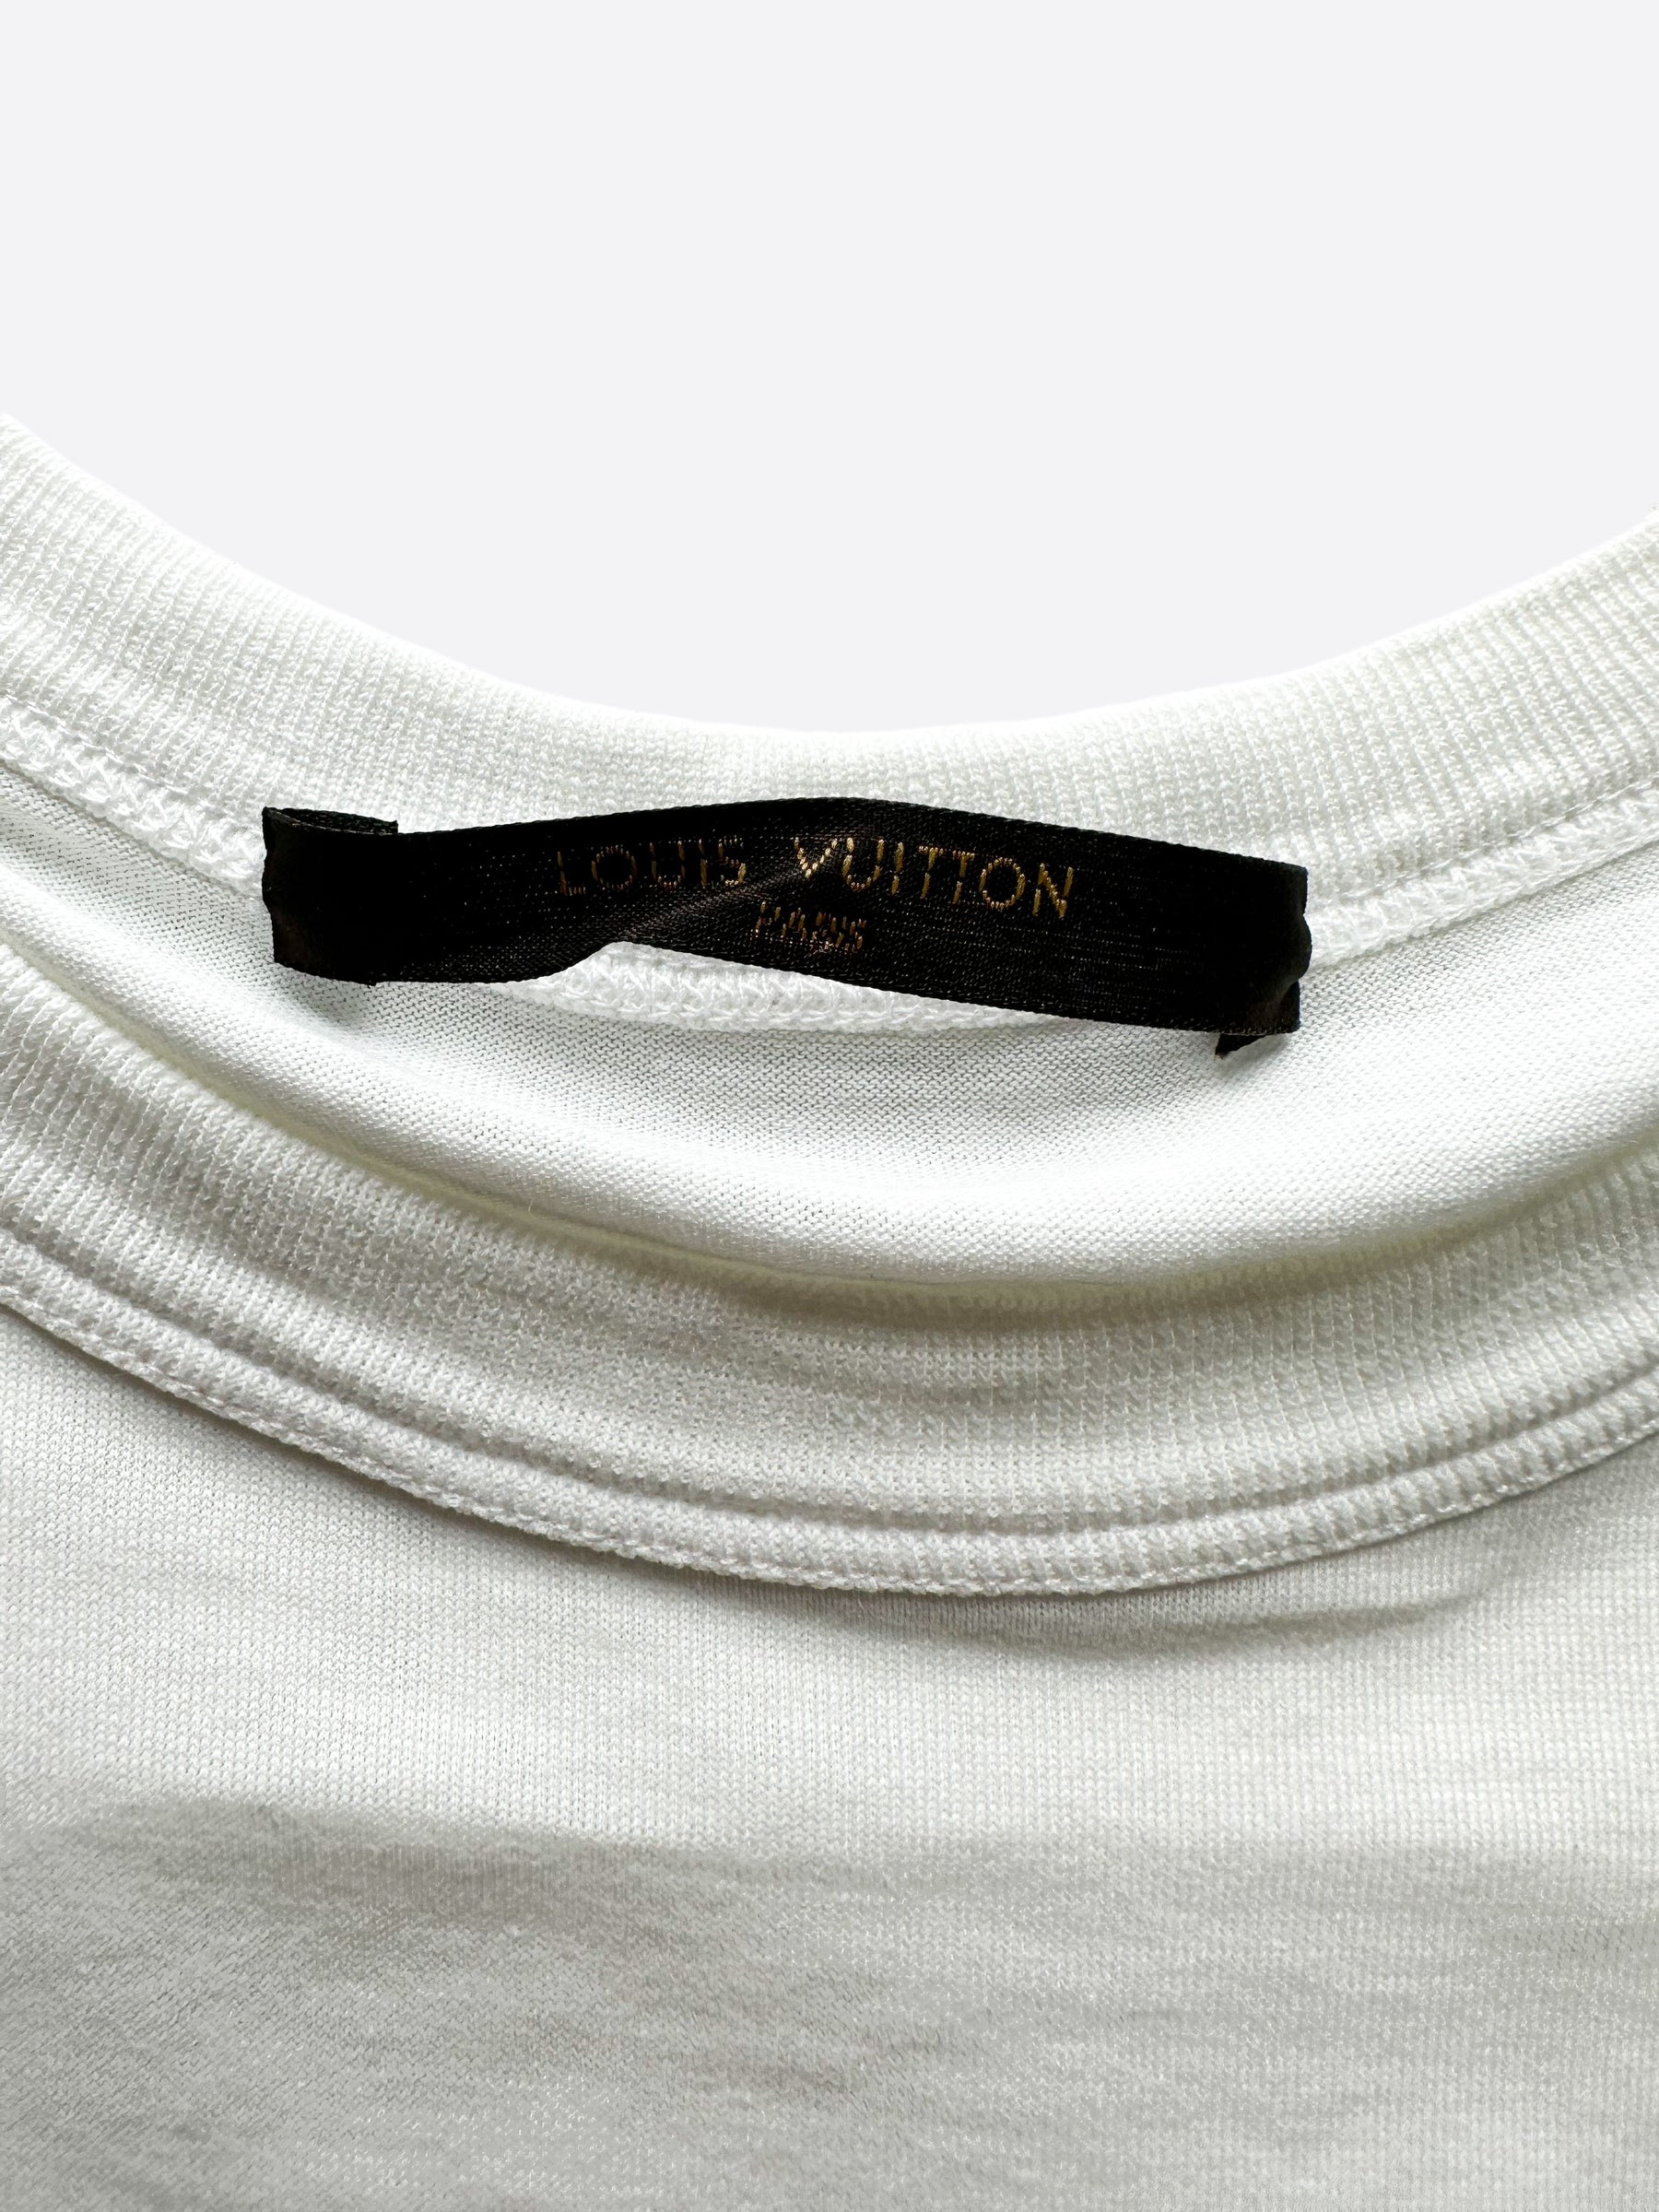 Supreme And Louis Vuitton Box Logo Shirt - Vintage & Classic Tee